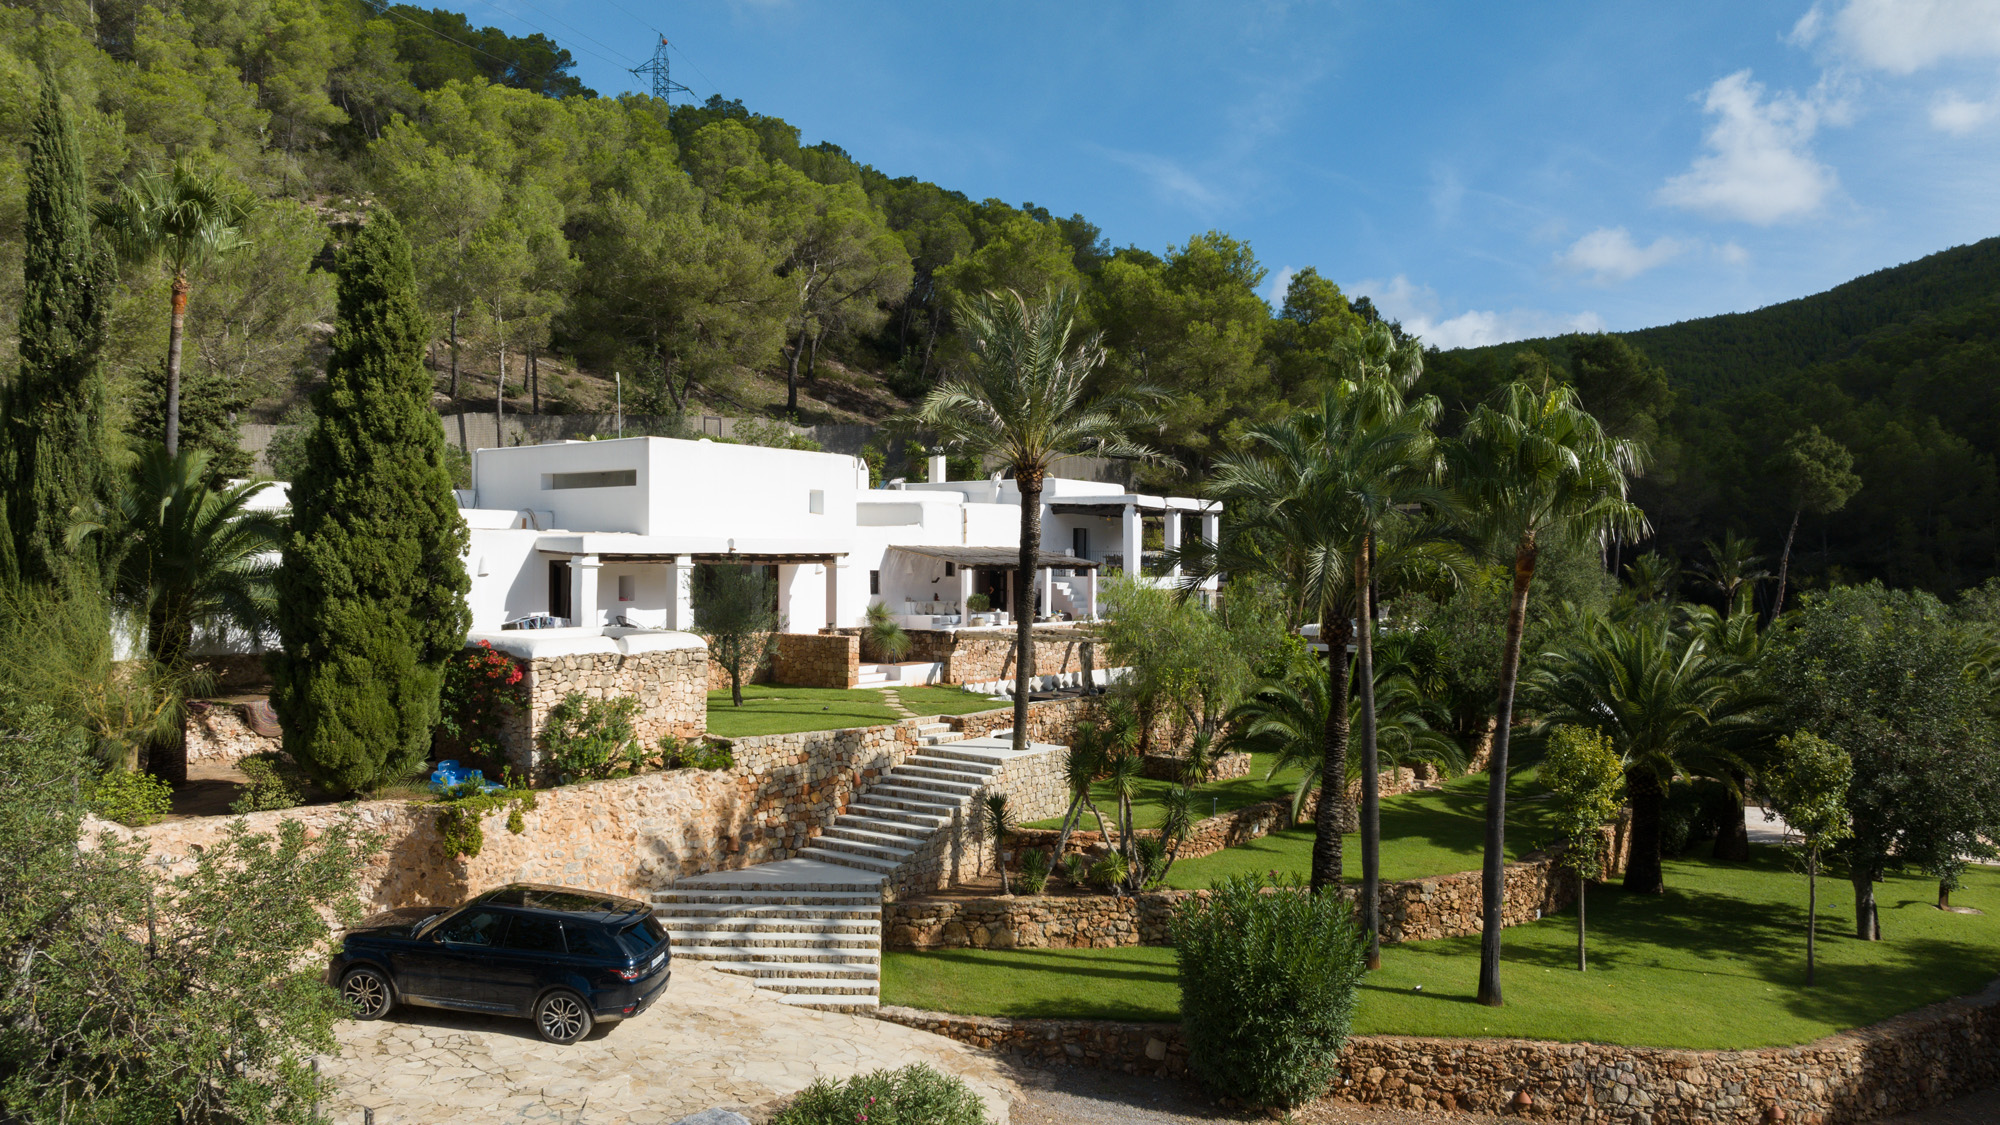 Drone view of Ibiza Finca and landscape